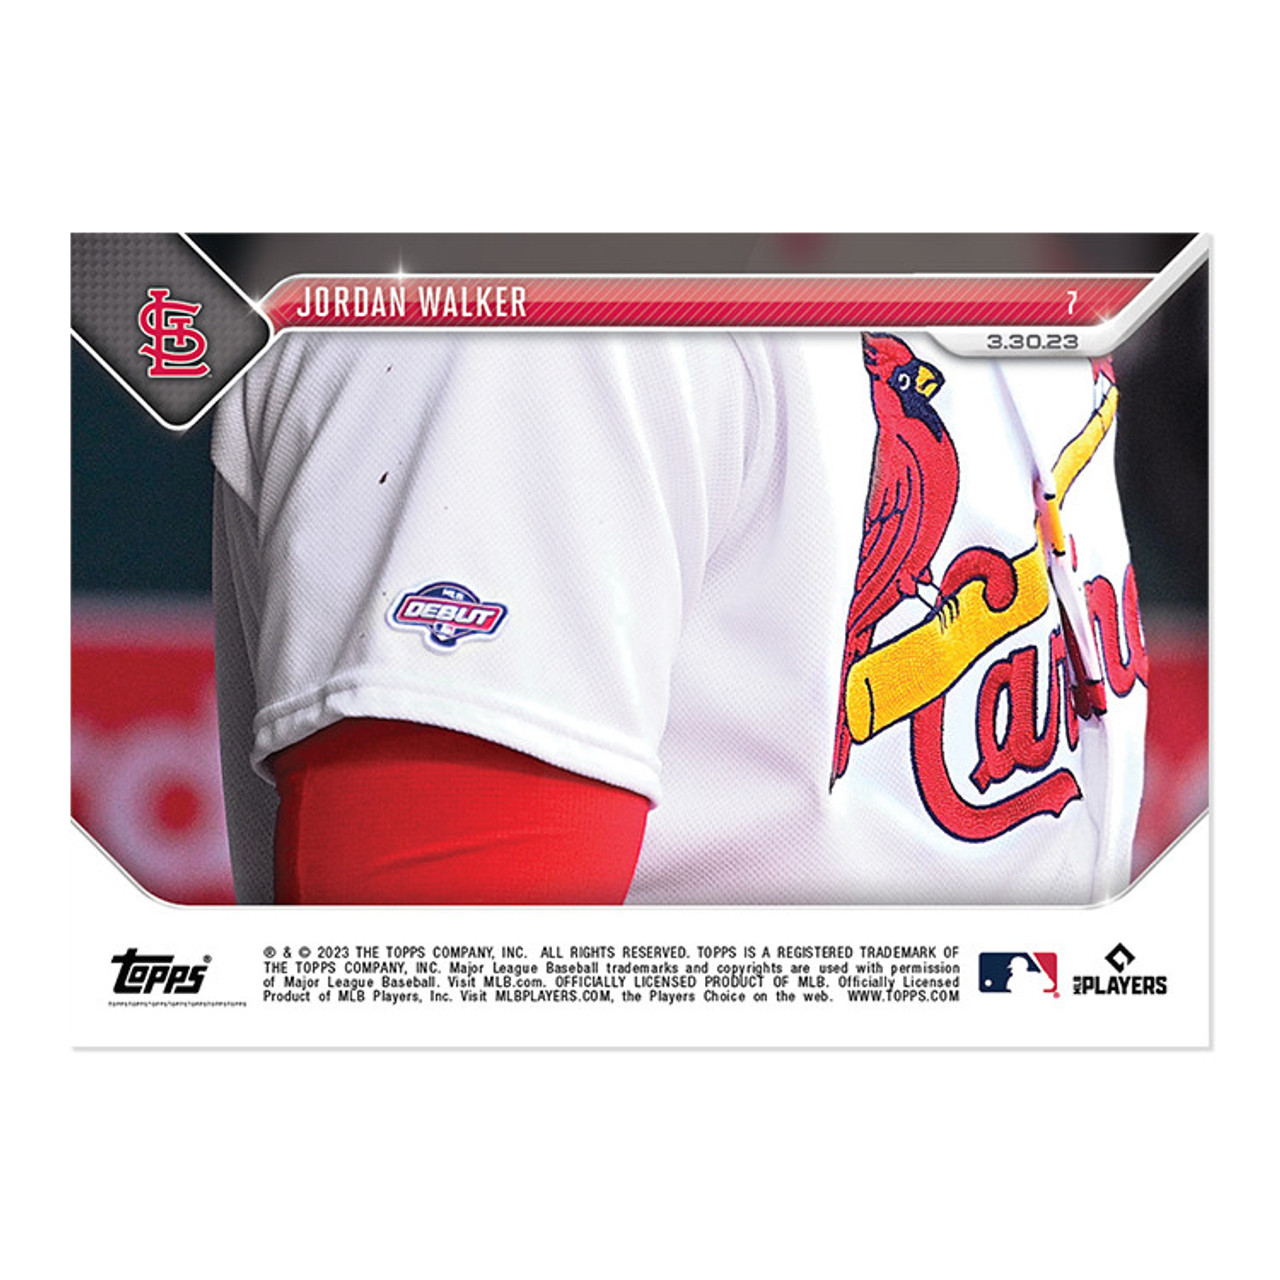 Cardinals Authentics: Jordan Walker Game Used Jersey